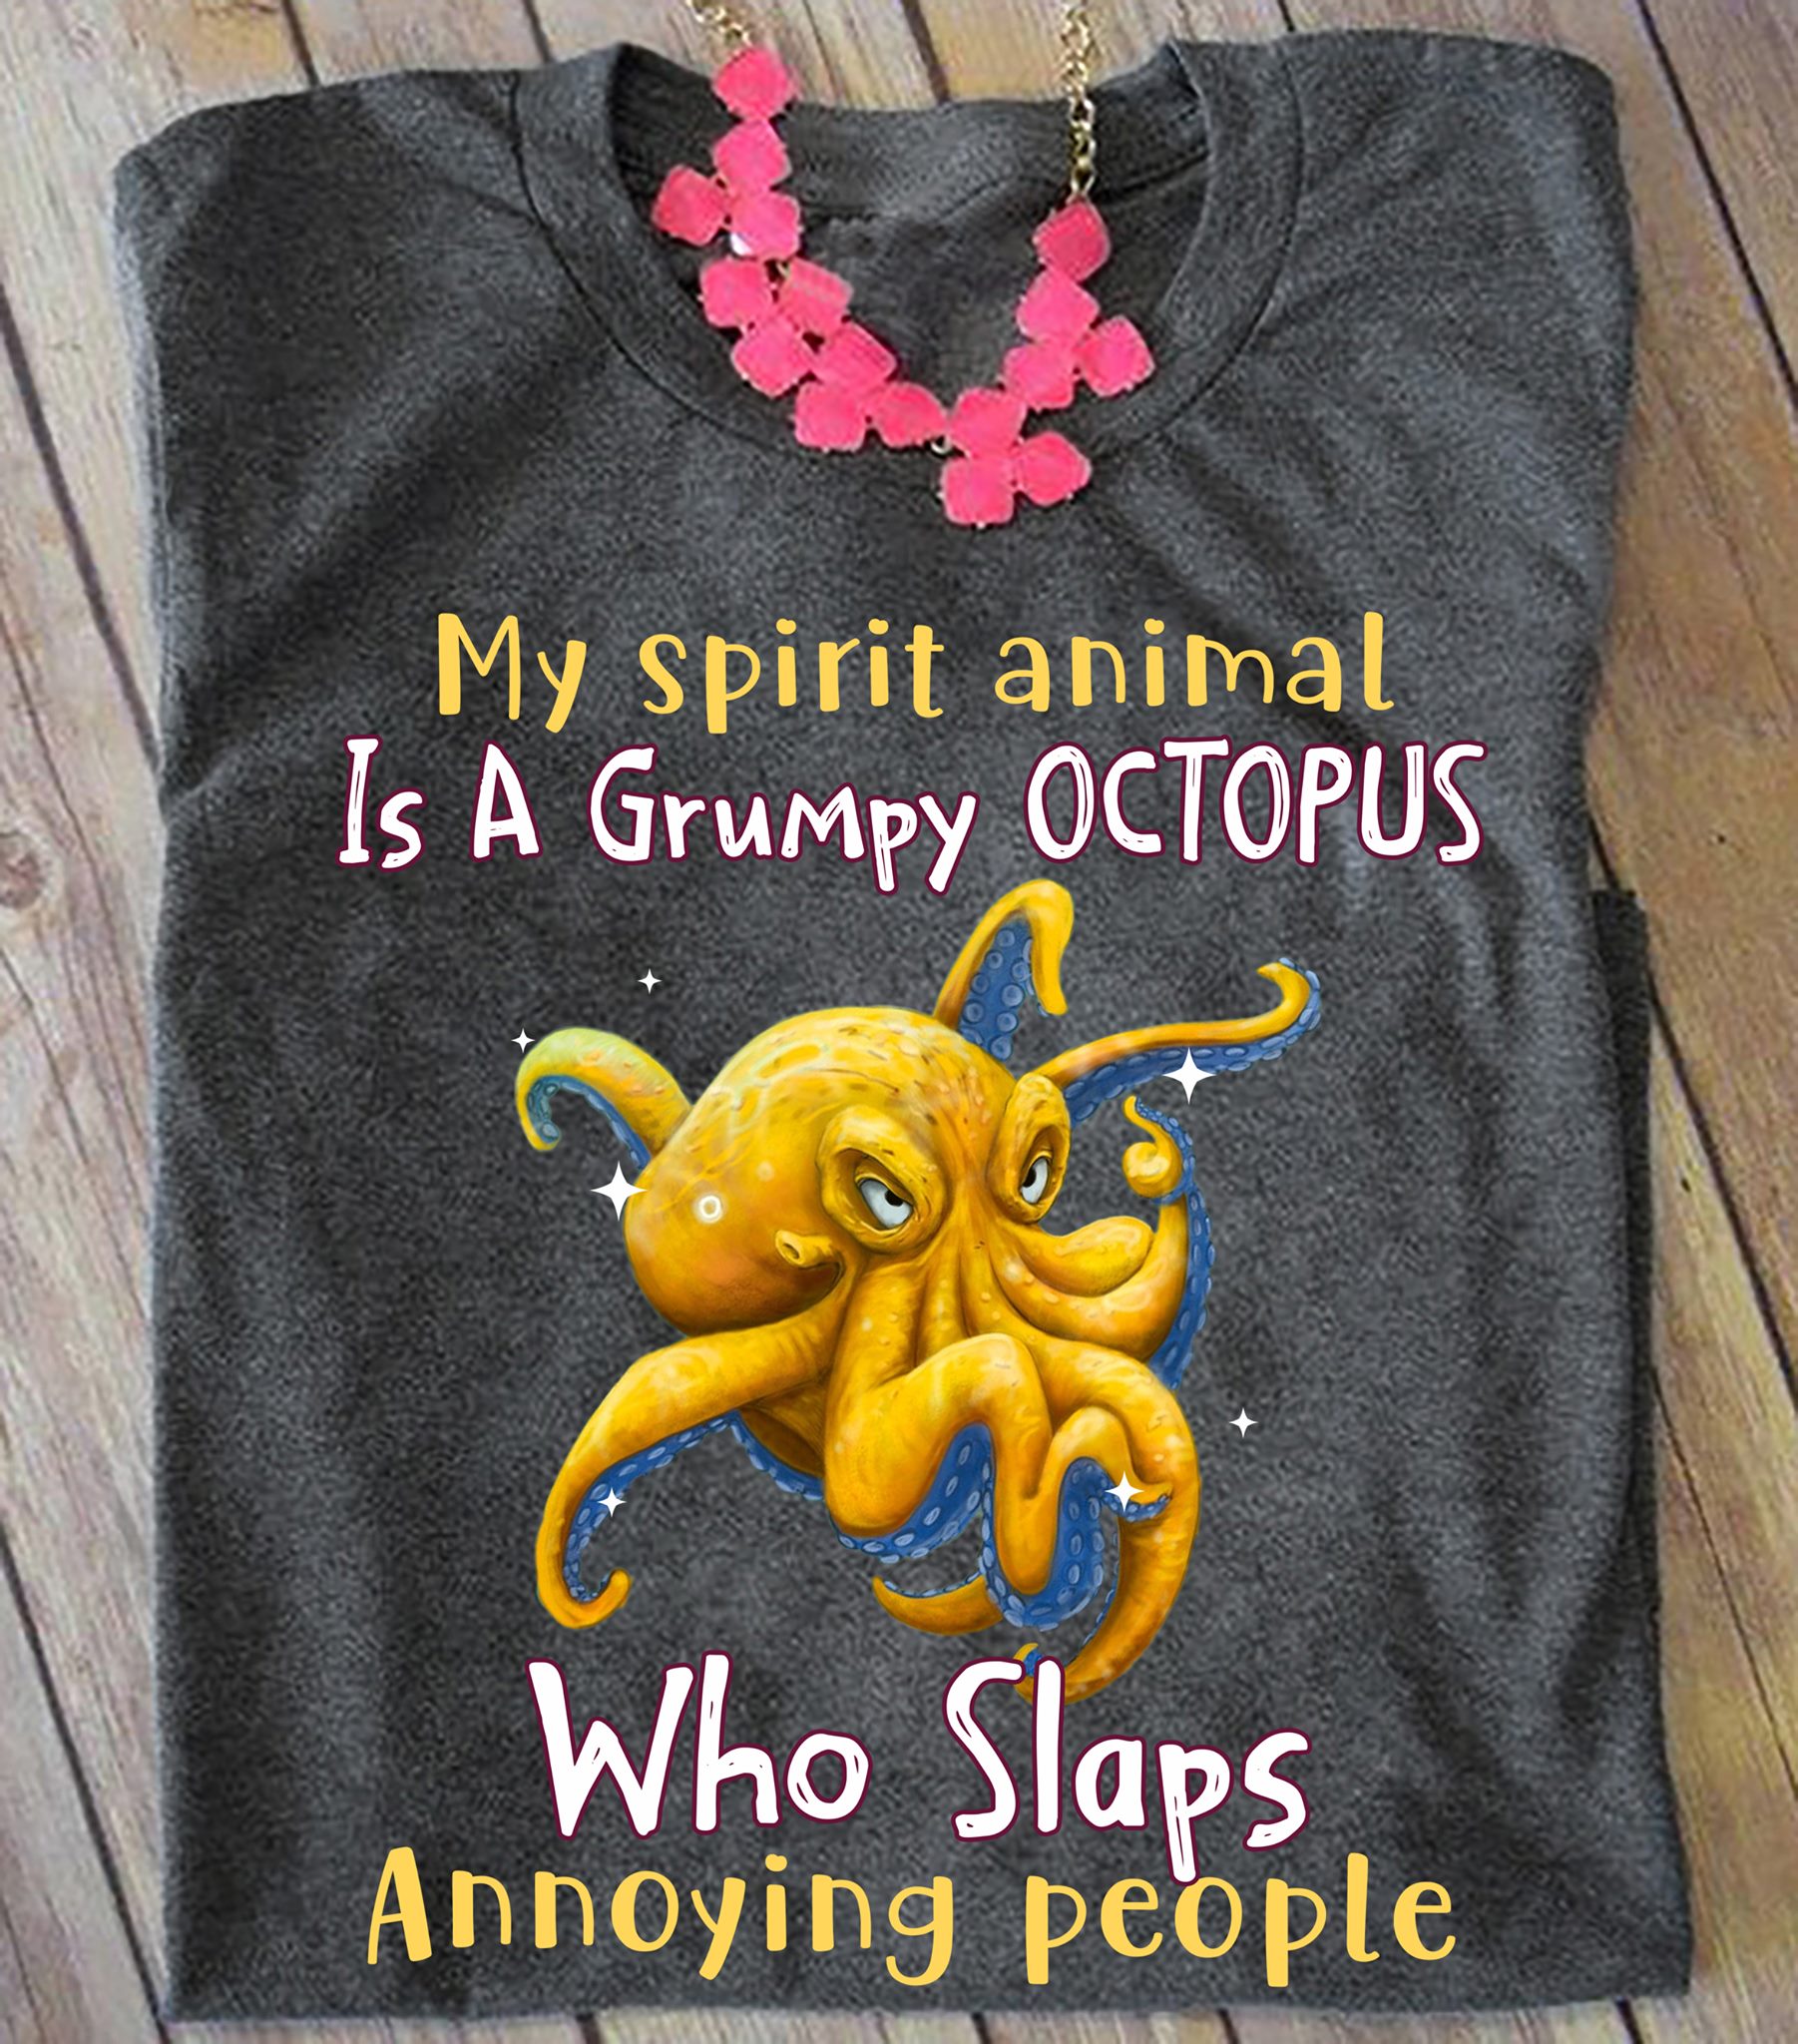 My spirit animal is a grumpy octopus who slaps annoying people